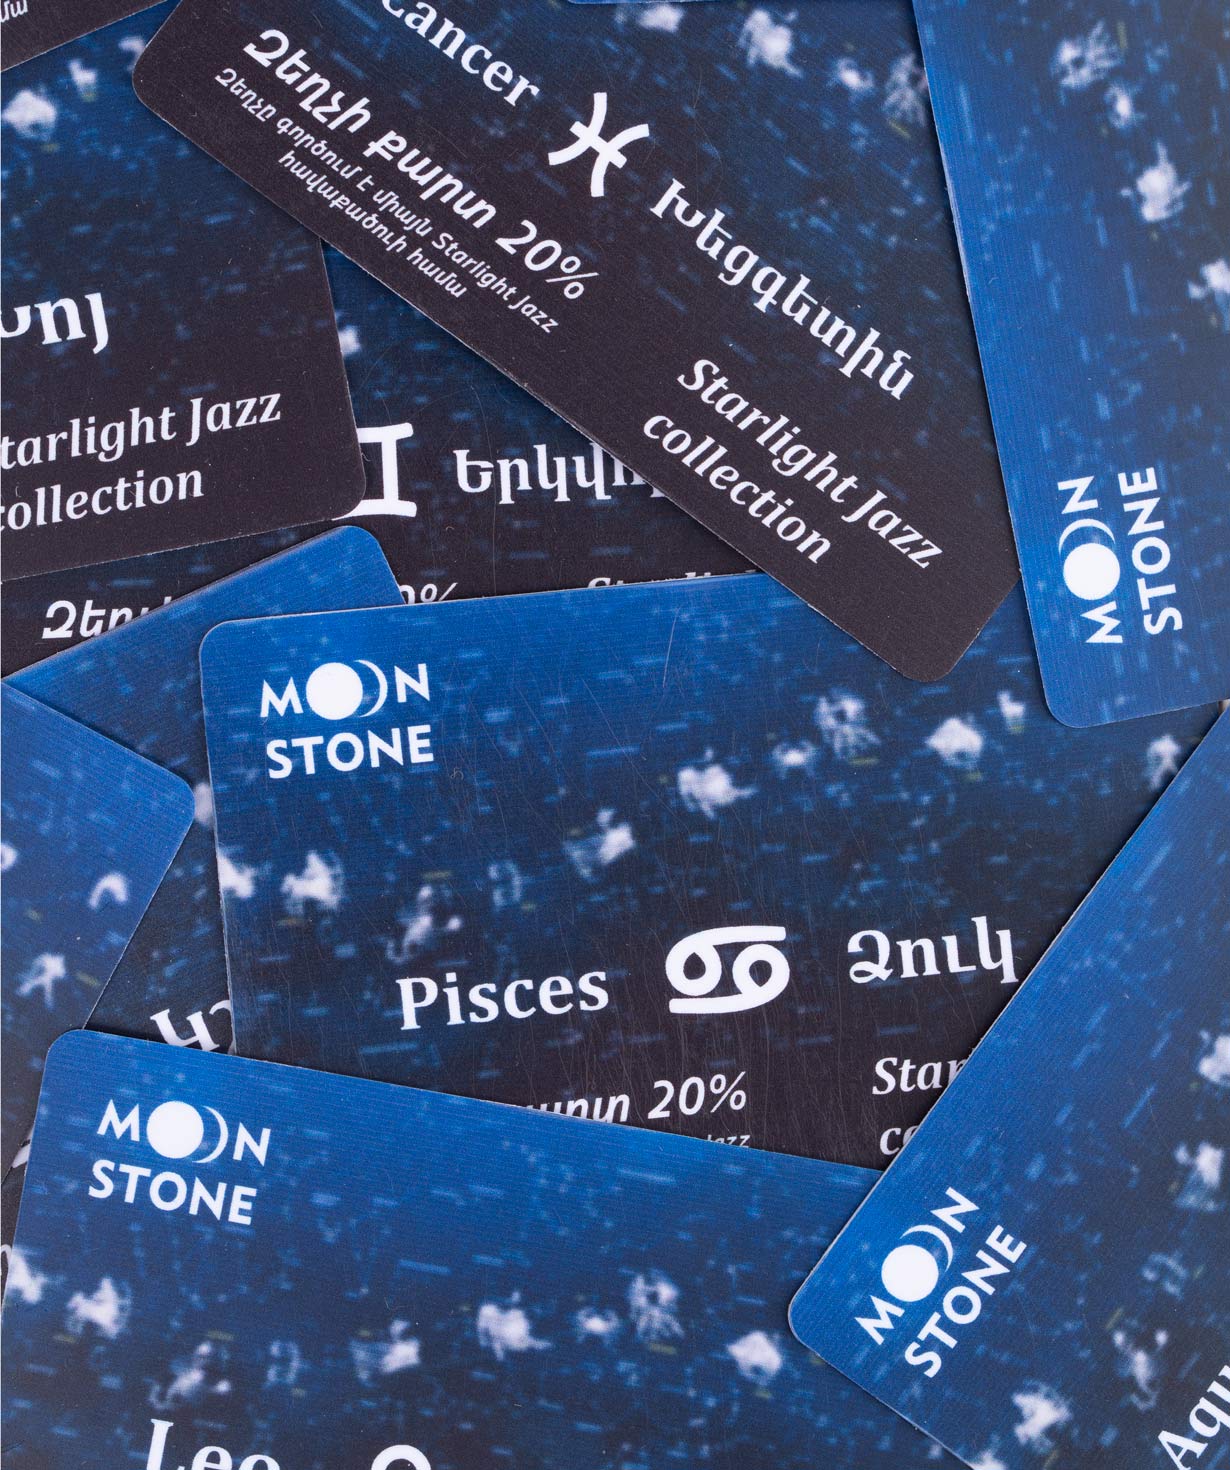 Rhodium Plated Silver Pendant Gemini Starlight Jazz Collection